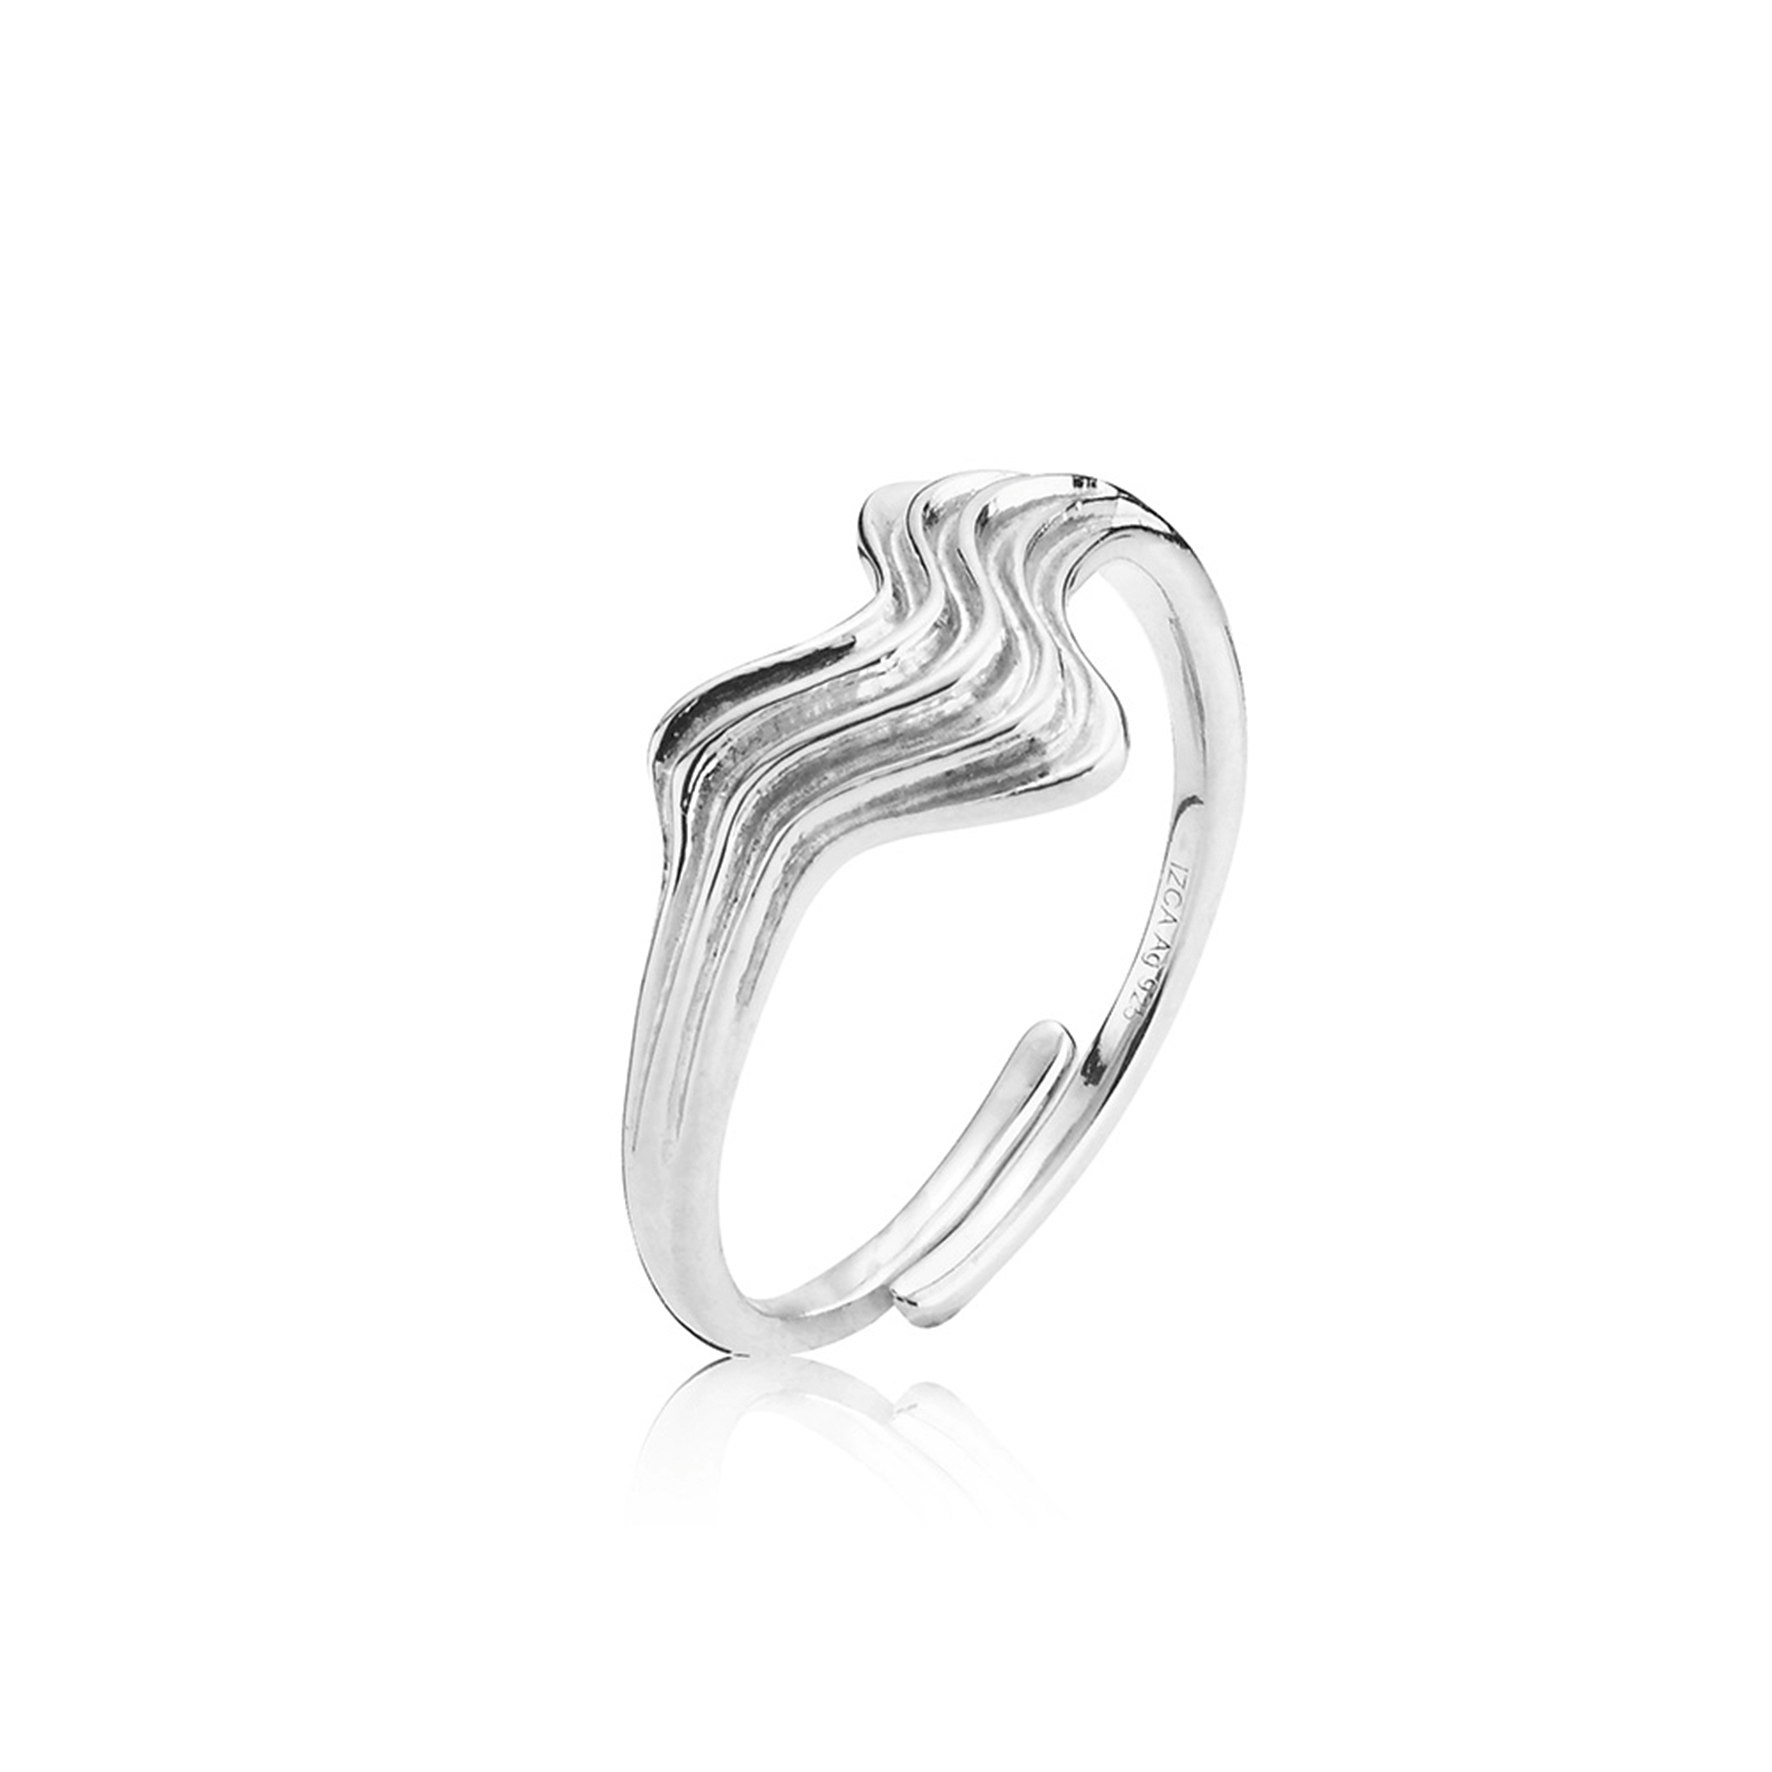 Silke x Sistie Waves Ring fra Sistie i Sølv Sterling 925